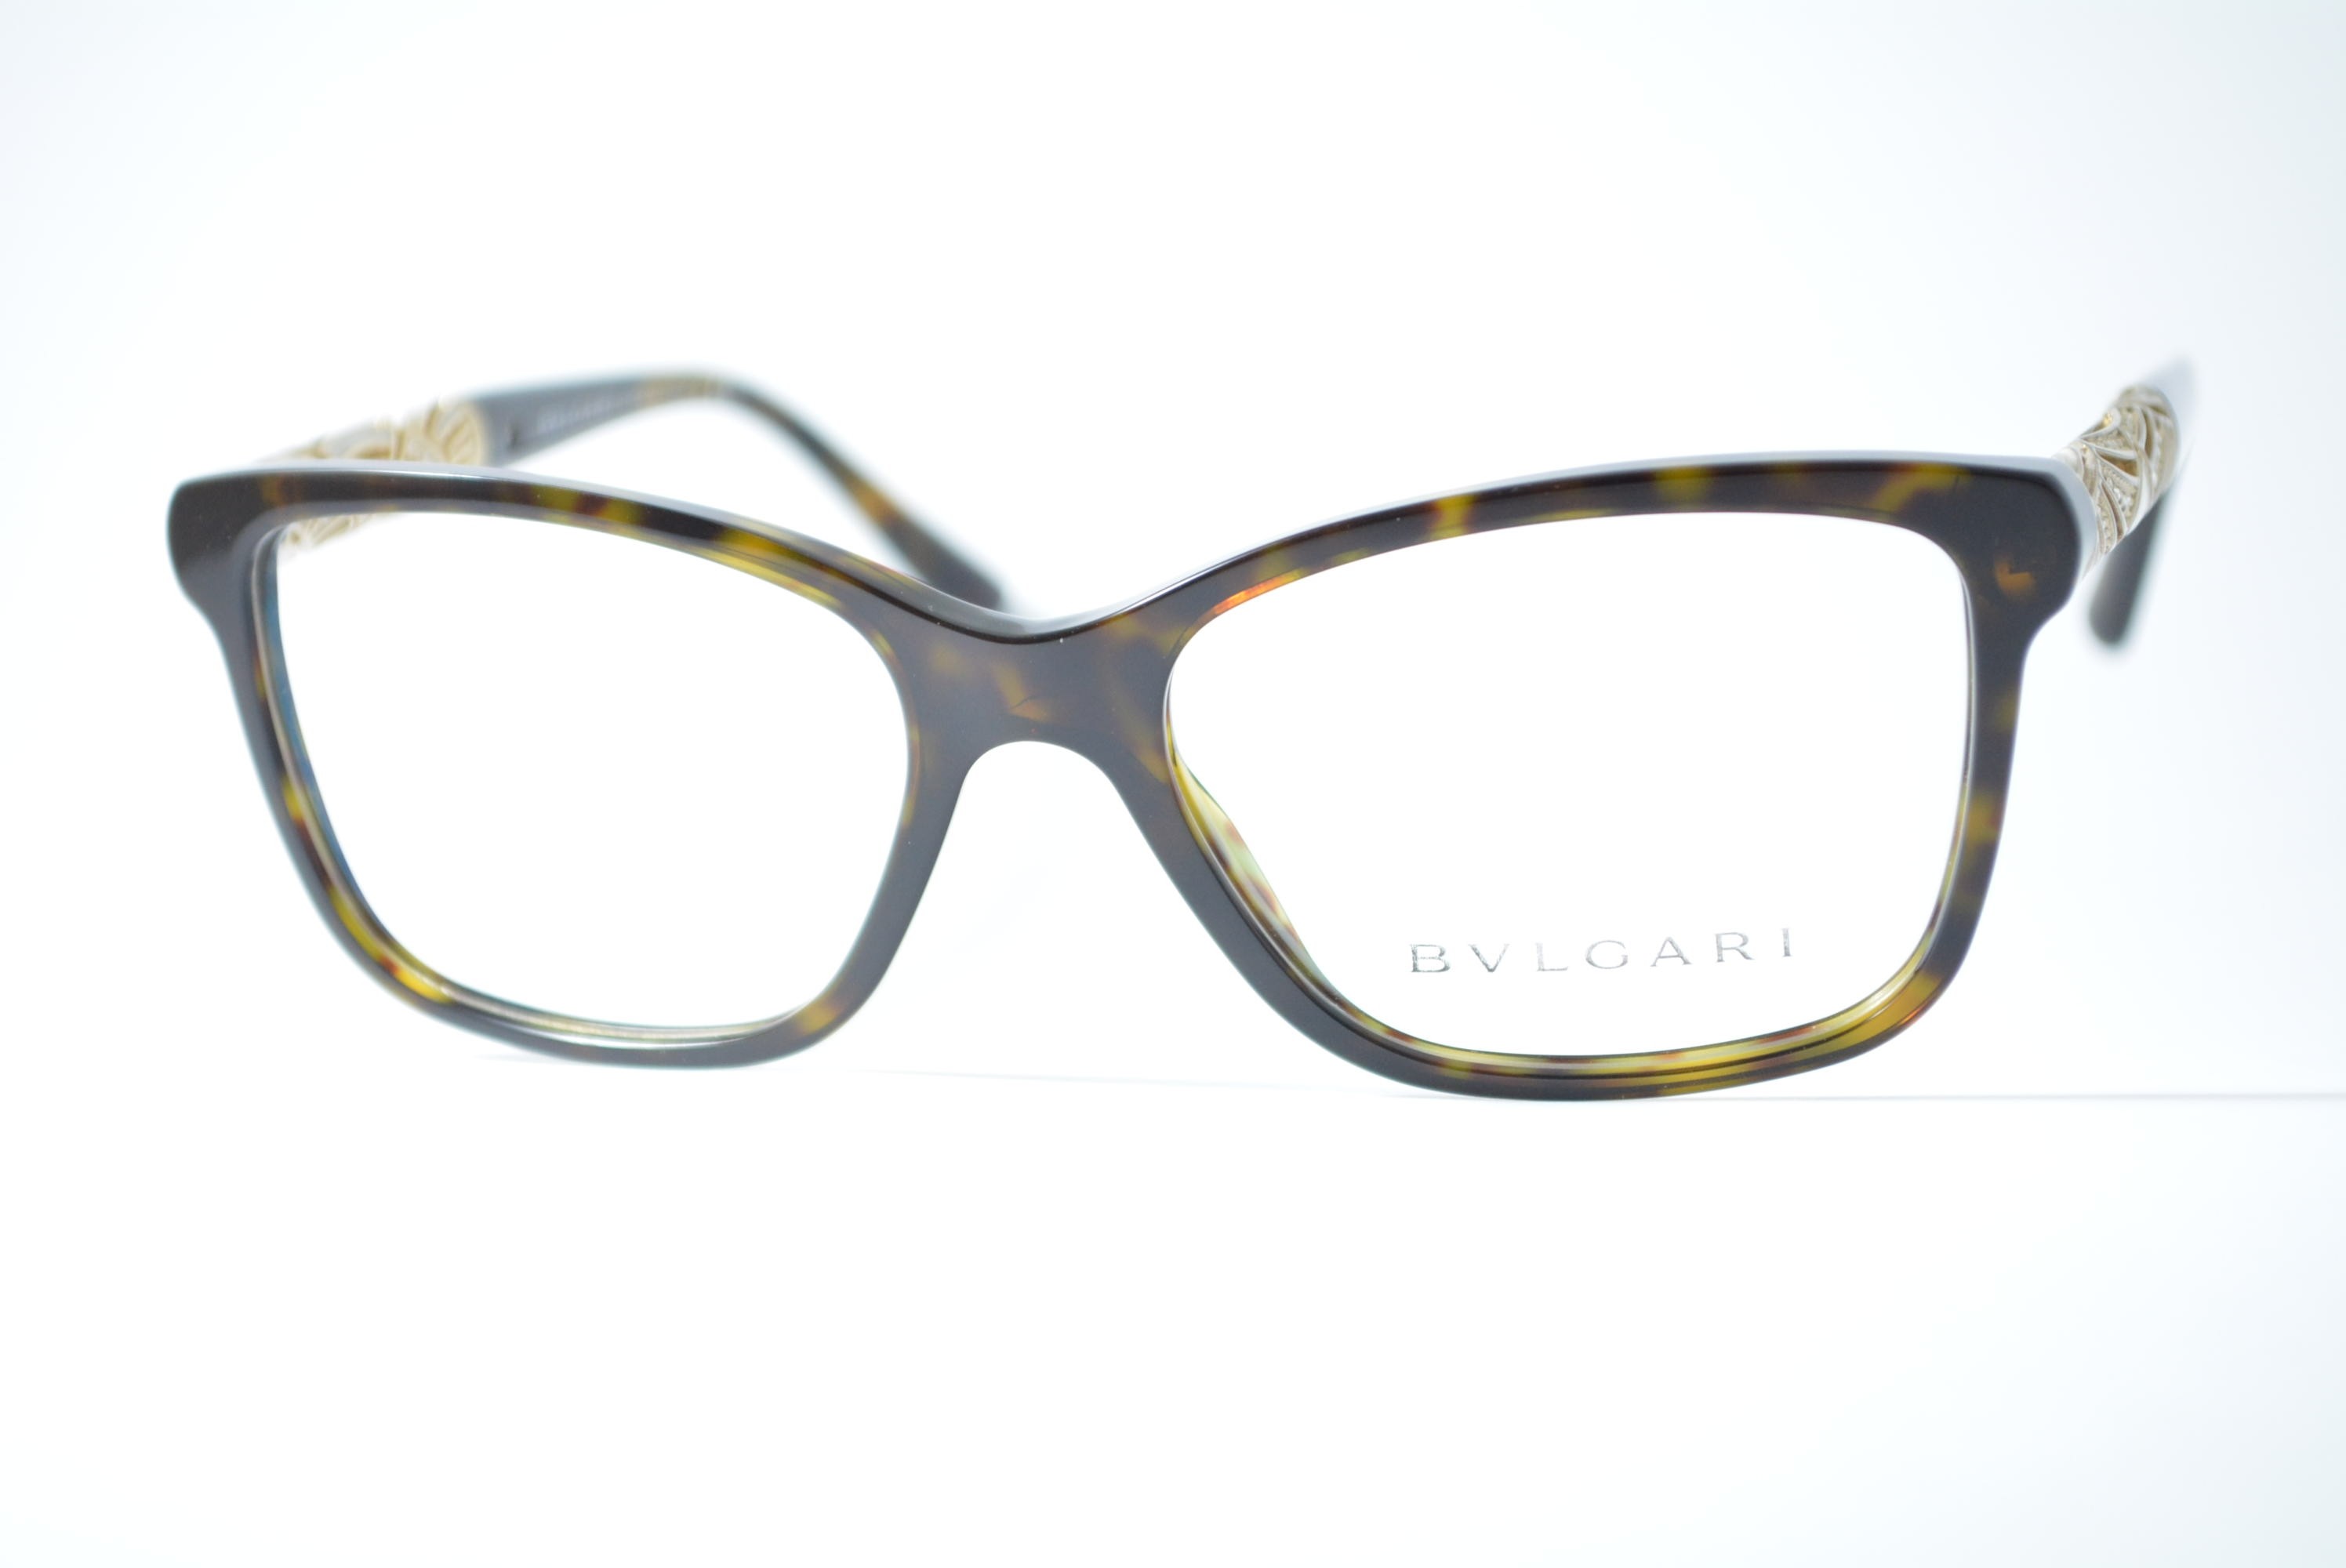 armação de óculos Bvlgari mod 4125-B 504